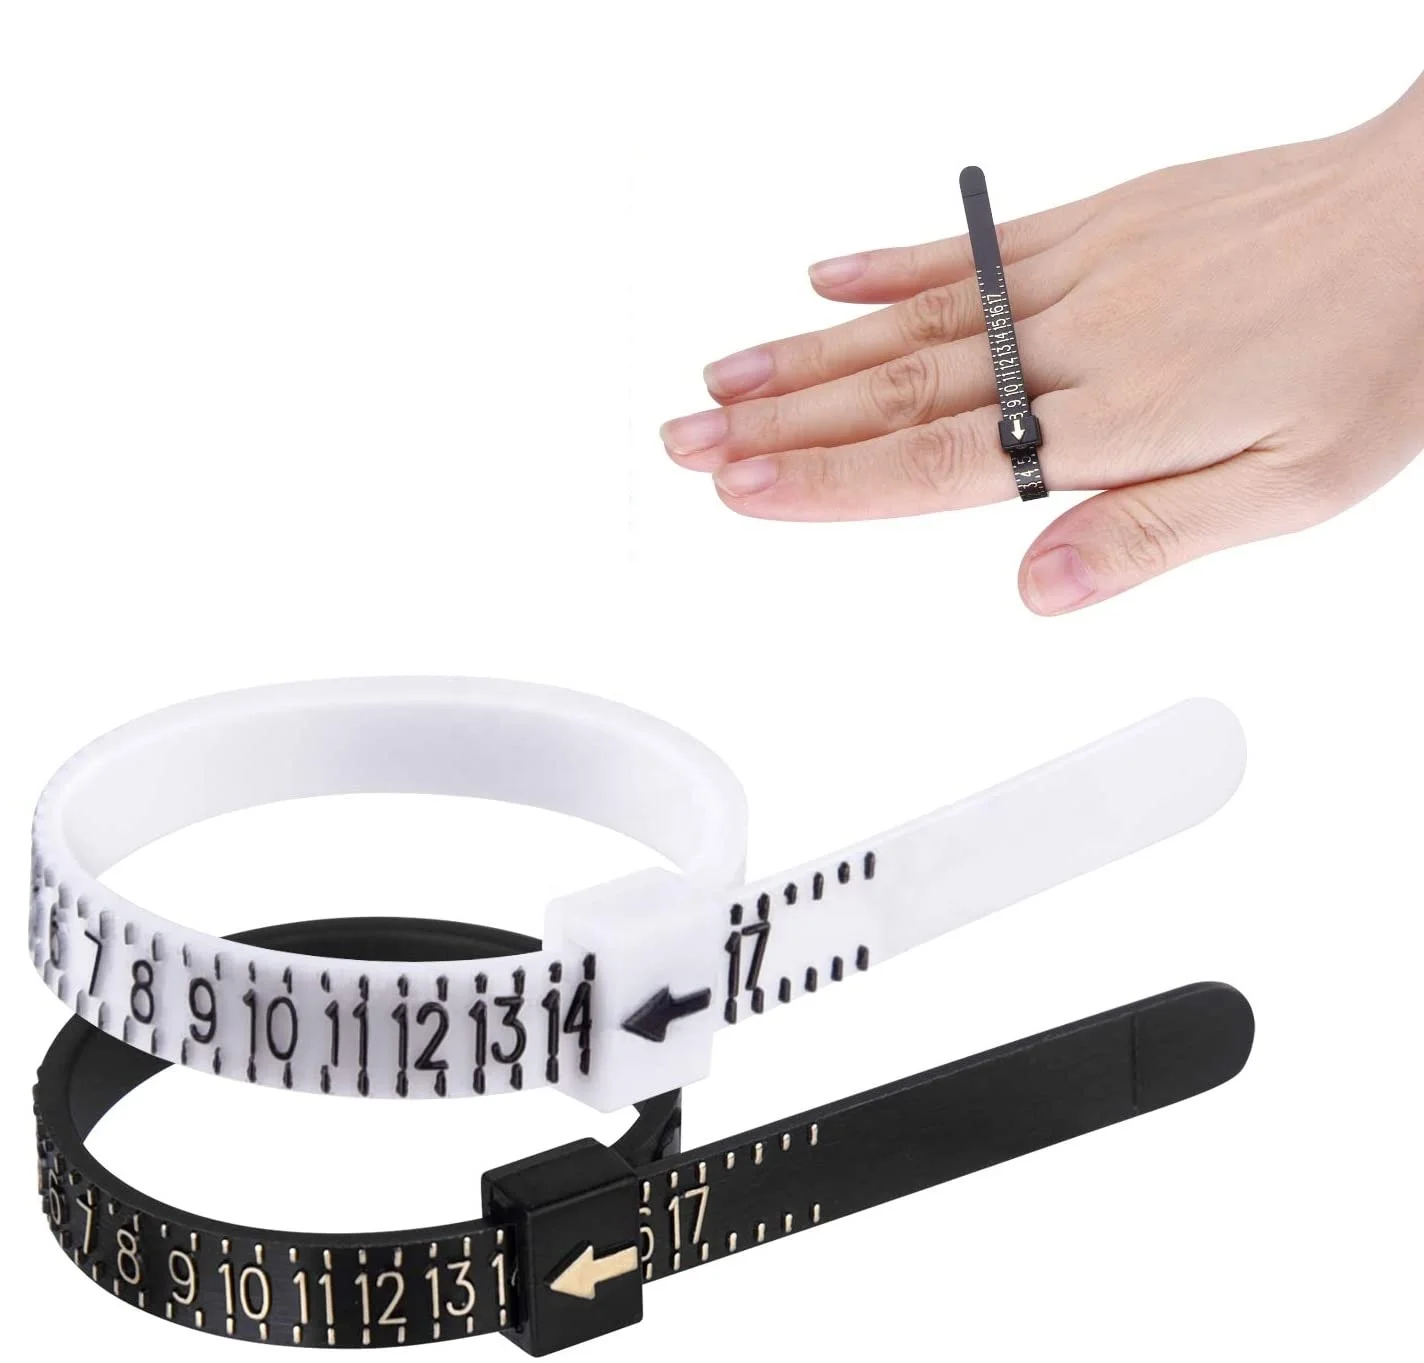 

men women Wedding Official Finger Measure gauge jewelry economy tool adjuster jp eu uk us measuring plastic ring sizer, Black/white